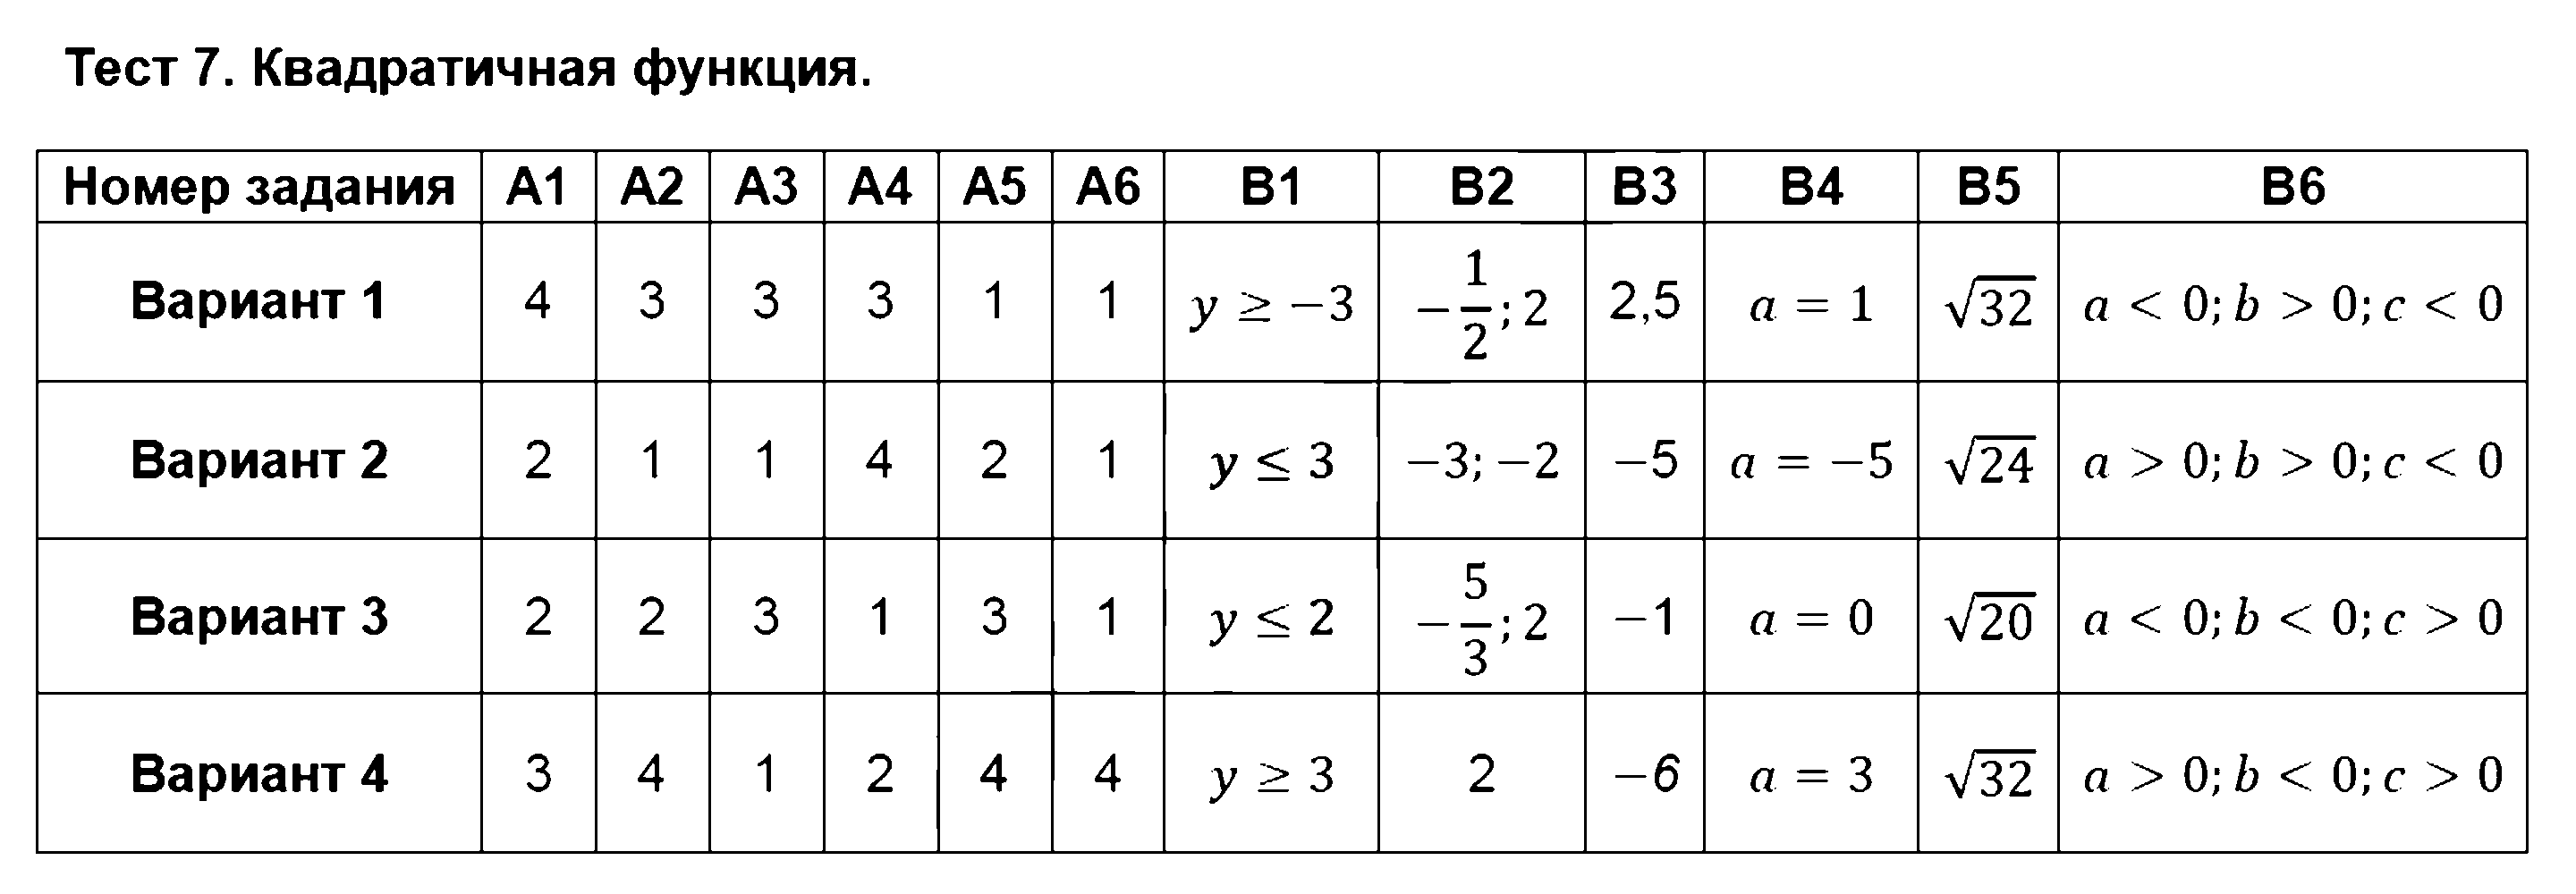 ГДЗ Алгебра 8 класс - Тест 7. Квадратичная функция